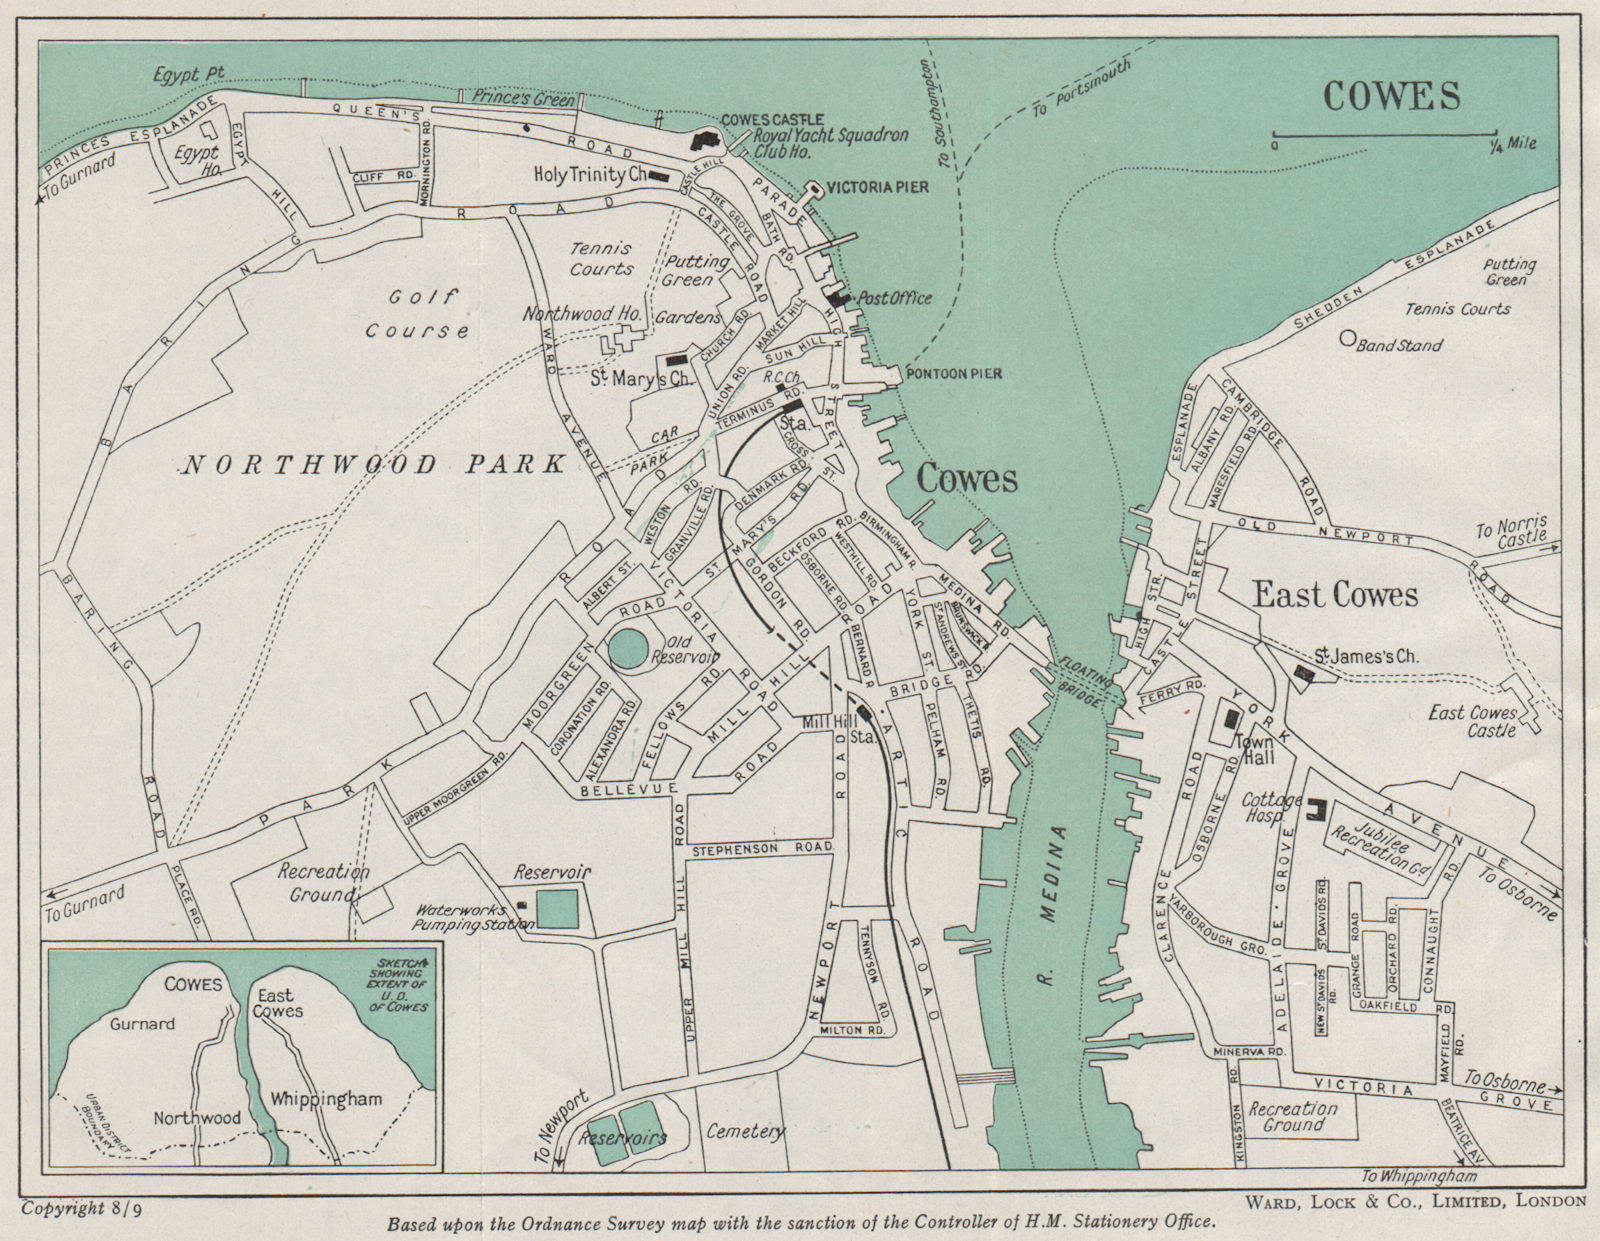 COWES vintage town/city plan. Isle of Wight. WARD LOCK 1948 old vintage map